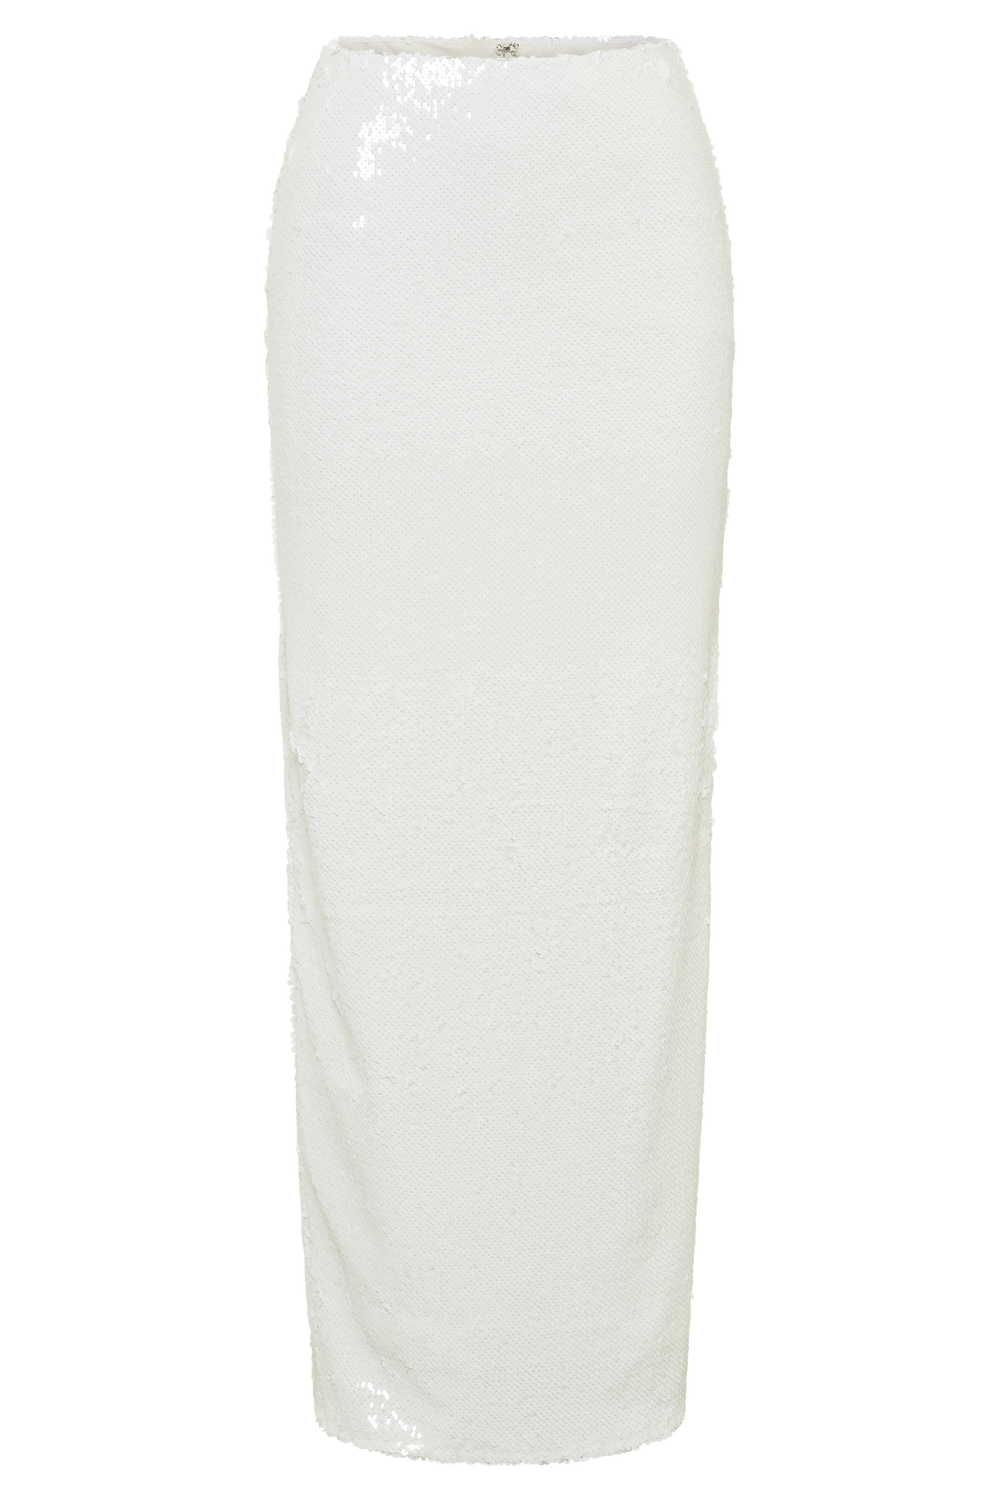 Cosette Sequin Maxi Skirt - White